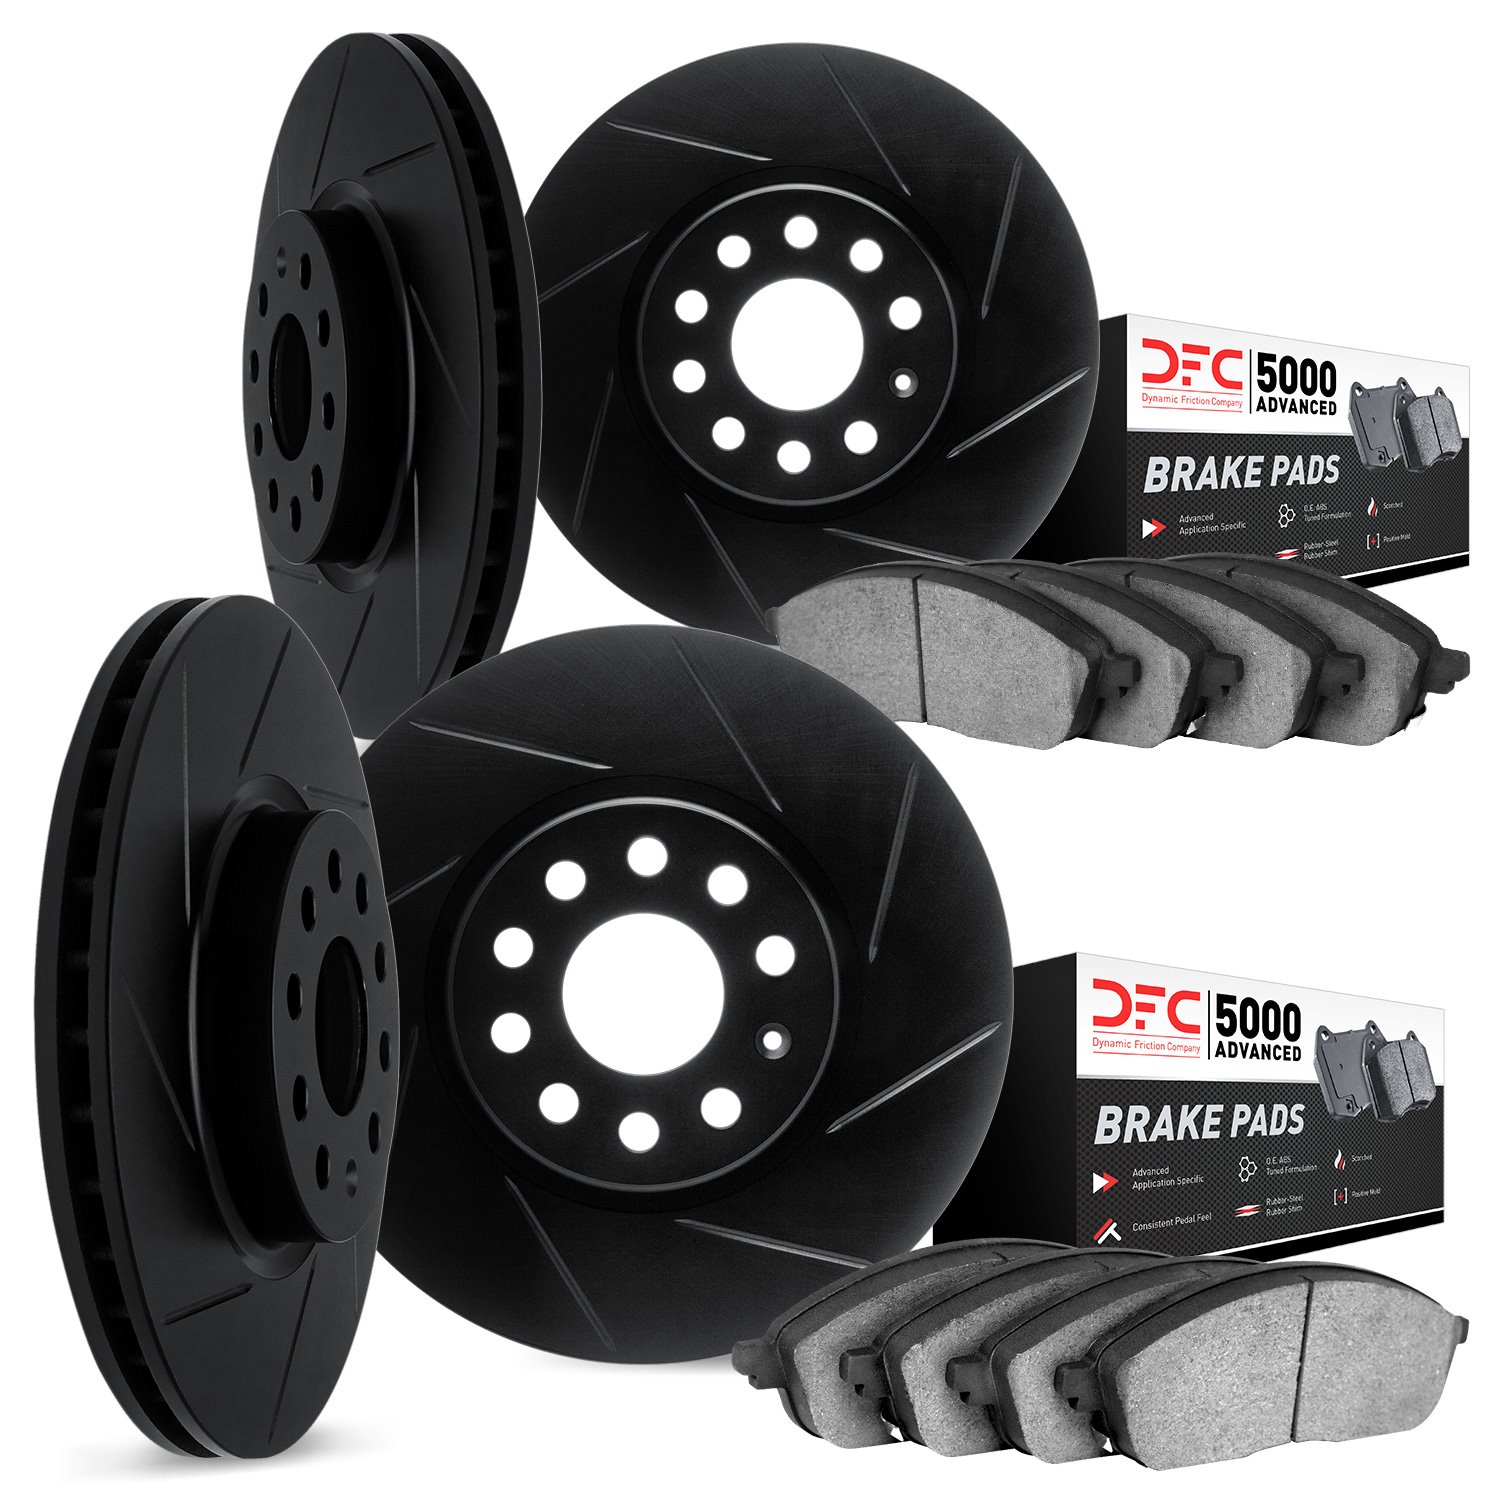 3514-01007 Slotted Brake Rotors w/5000 Advanced Brake Pads Kit & Hardware [Black], 2009-2017 Suzuki, Position: Front and Rear